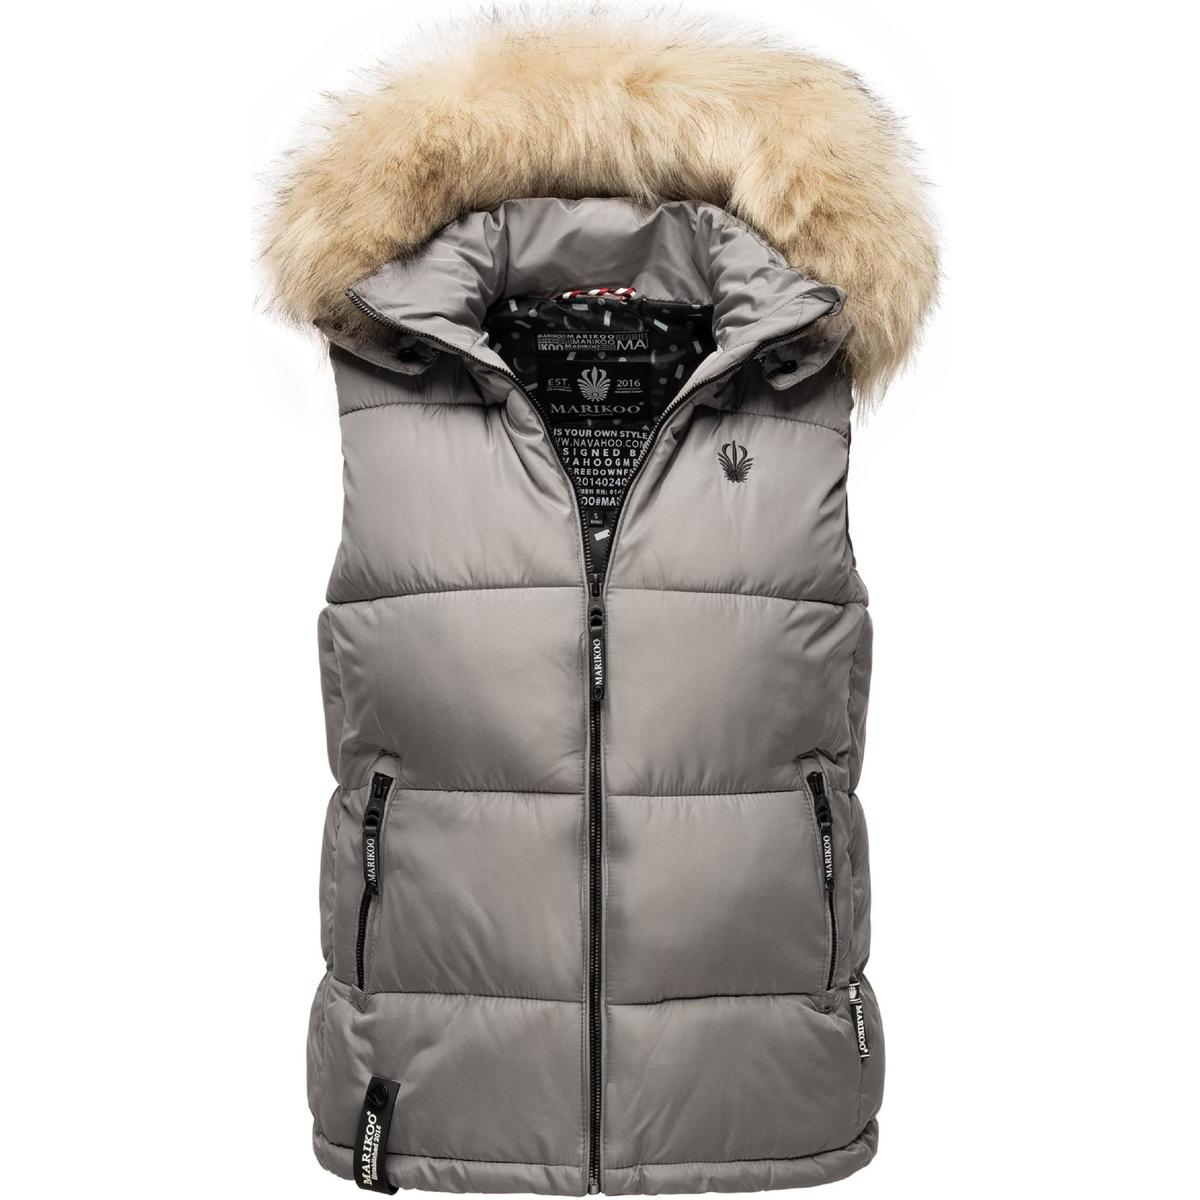 Marikoo Steppweste Eisflöckchen Grau - Kleidung Jacken Damen 69,95 €